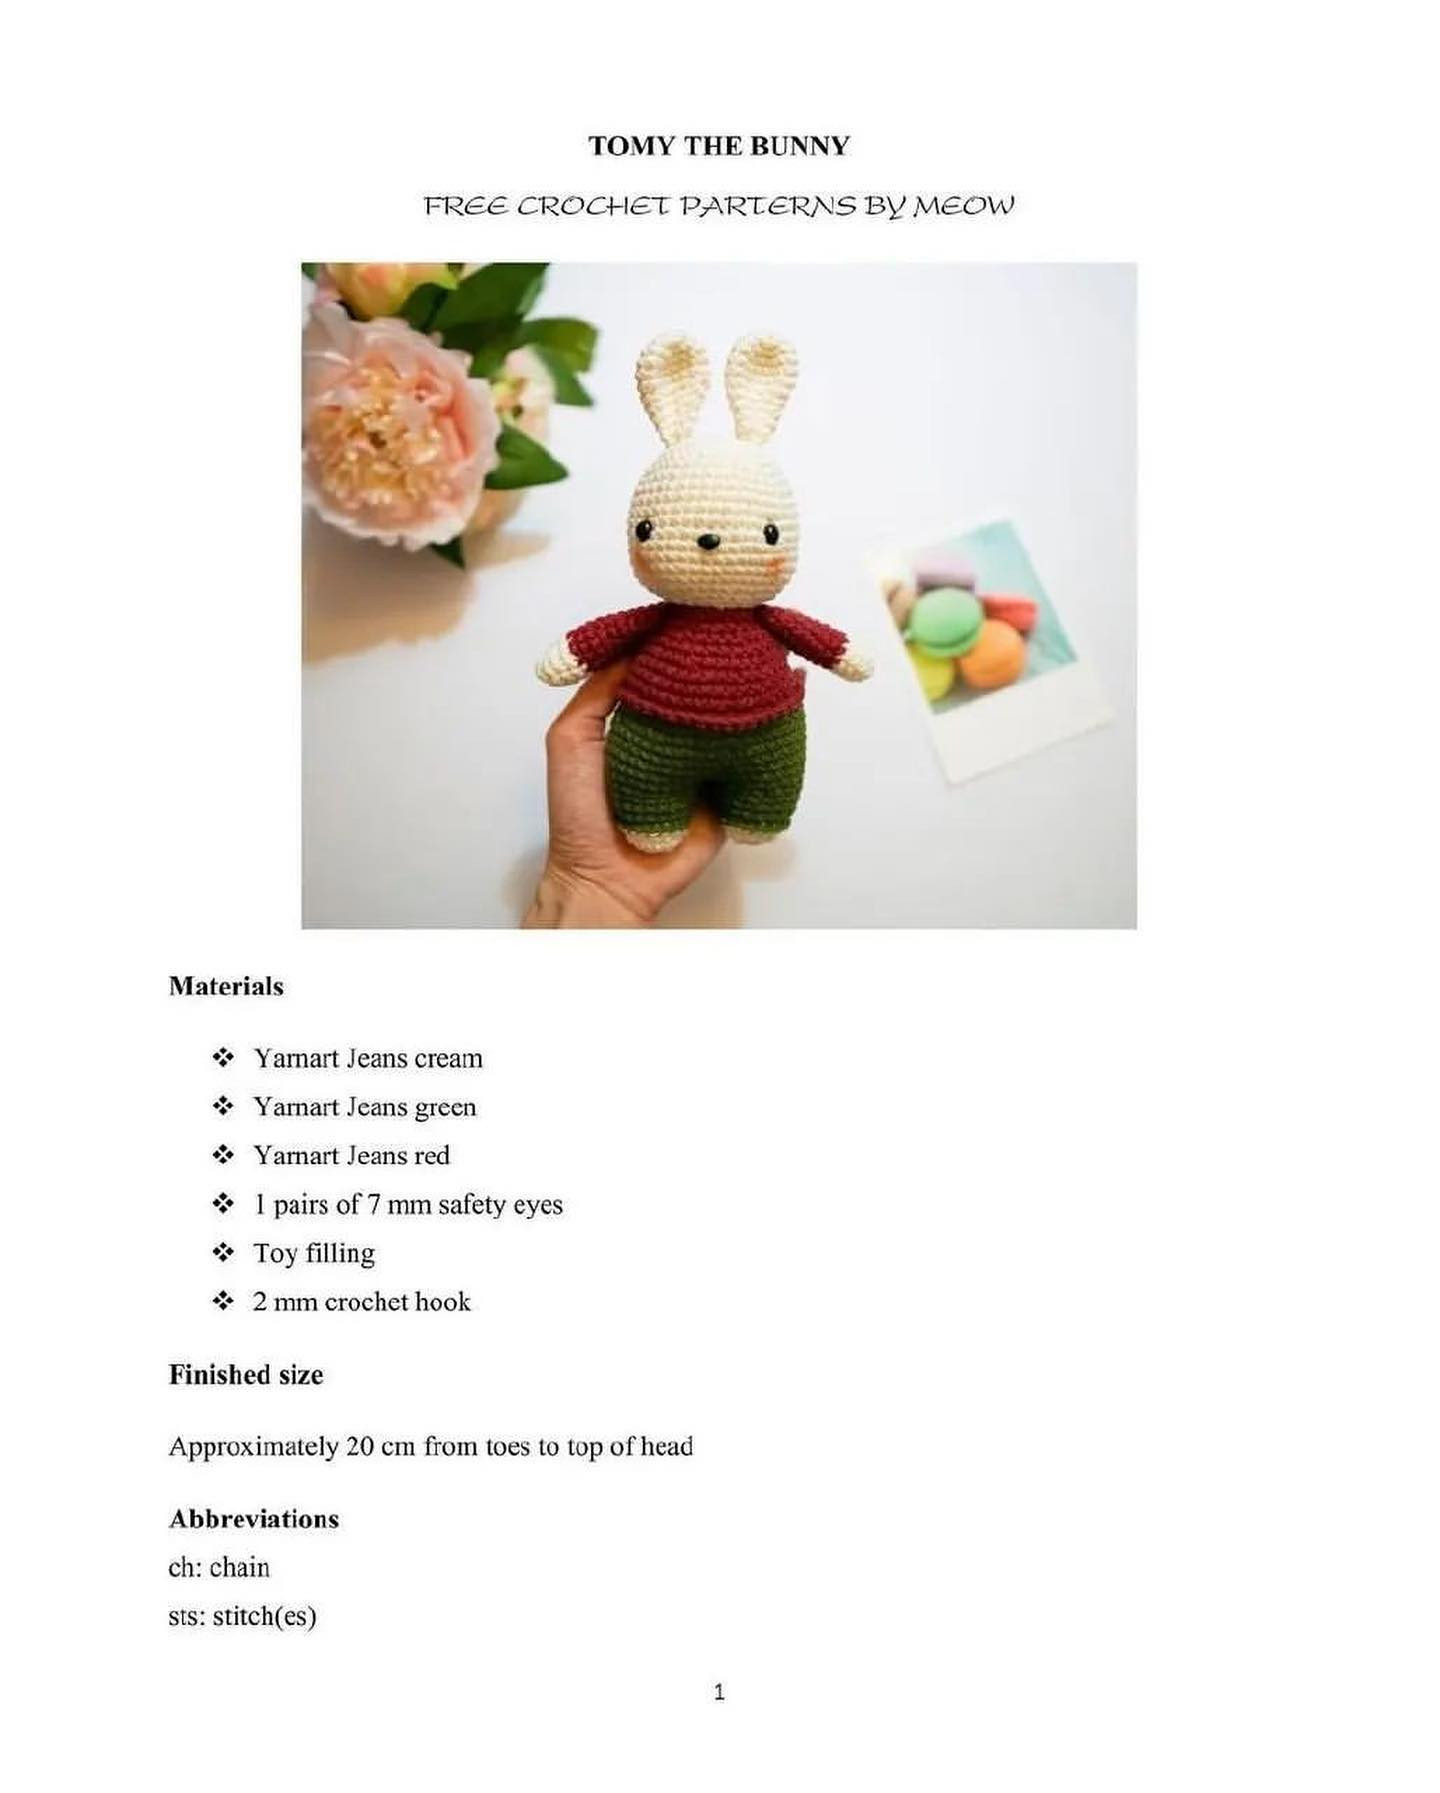 tomy the bunny free crochet pattern.